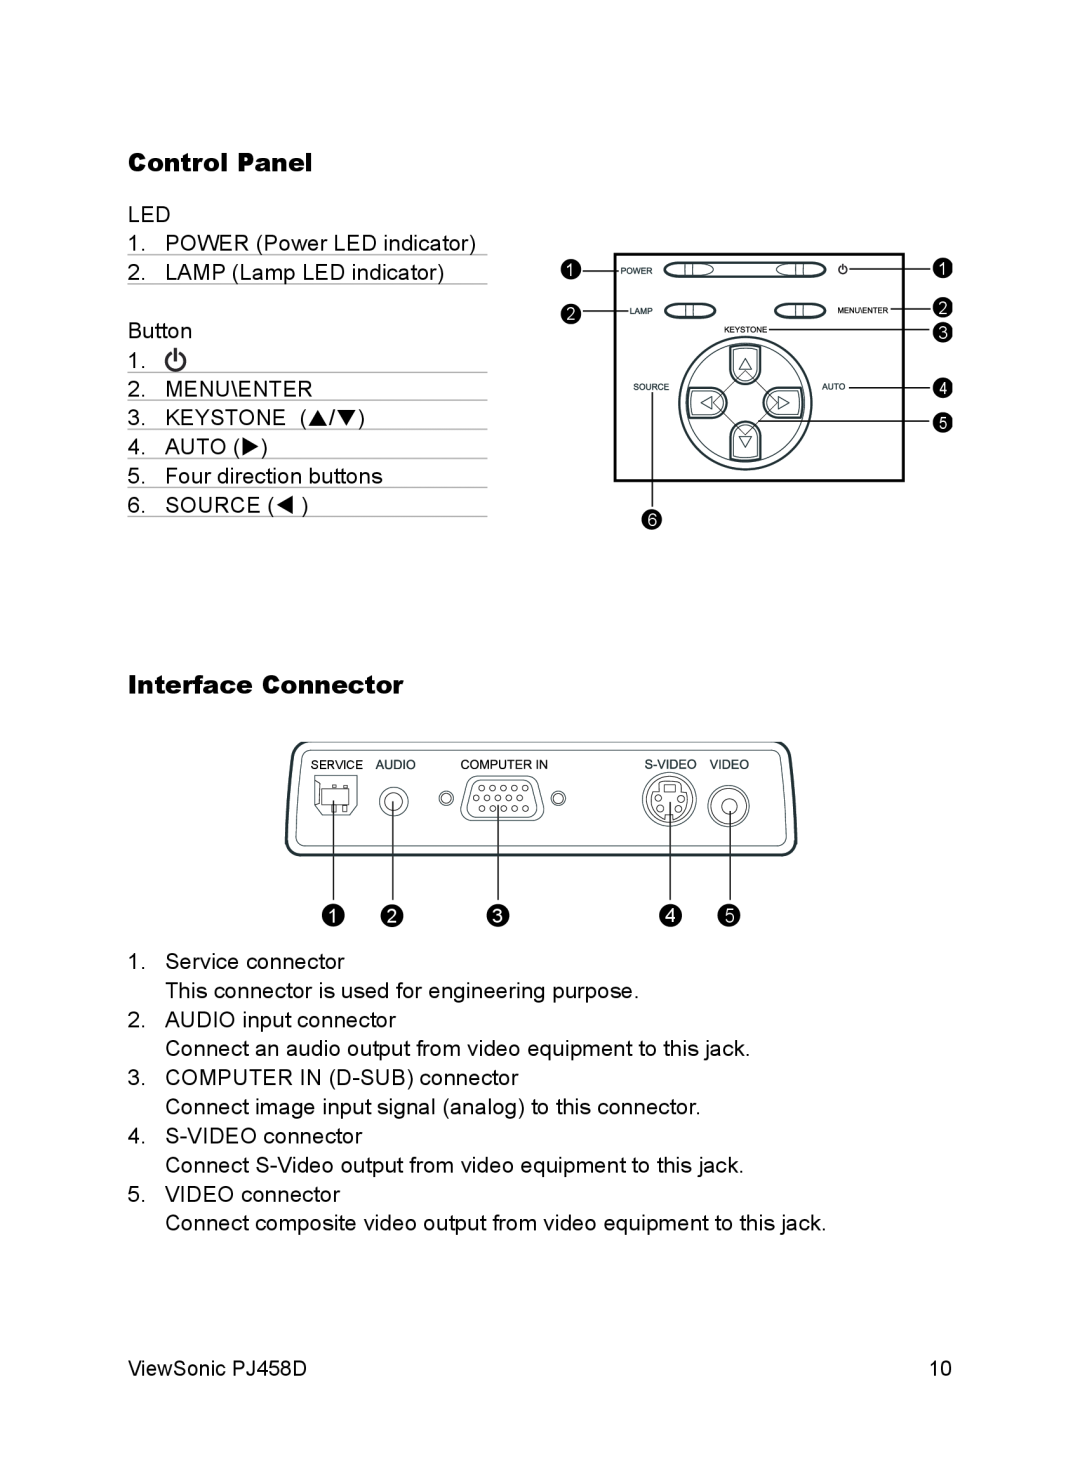 ViewSonic PJ458D manual Control Panel, Interface Connector, Service 